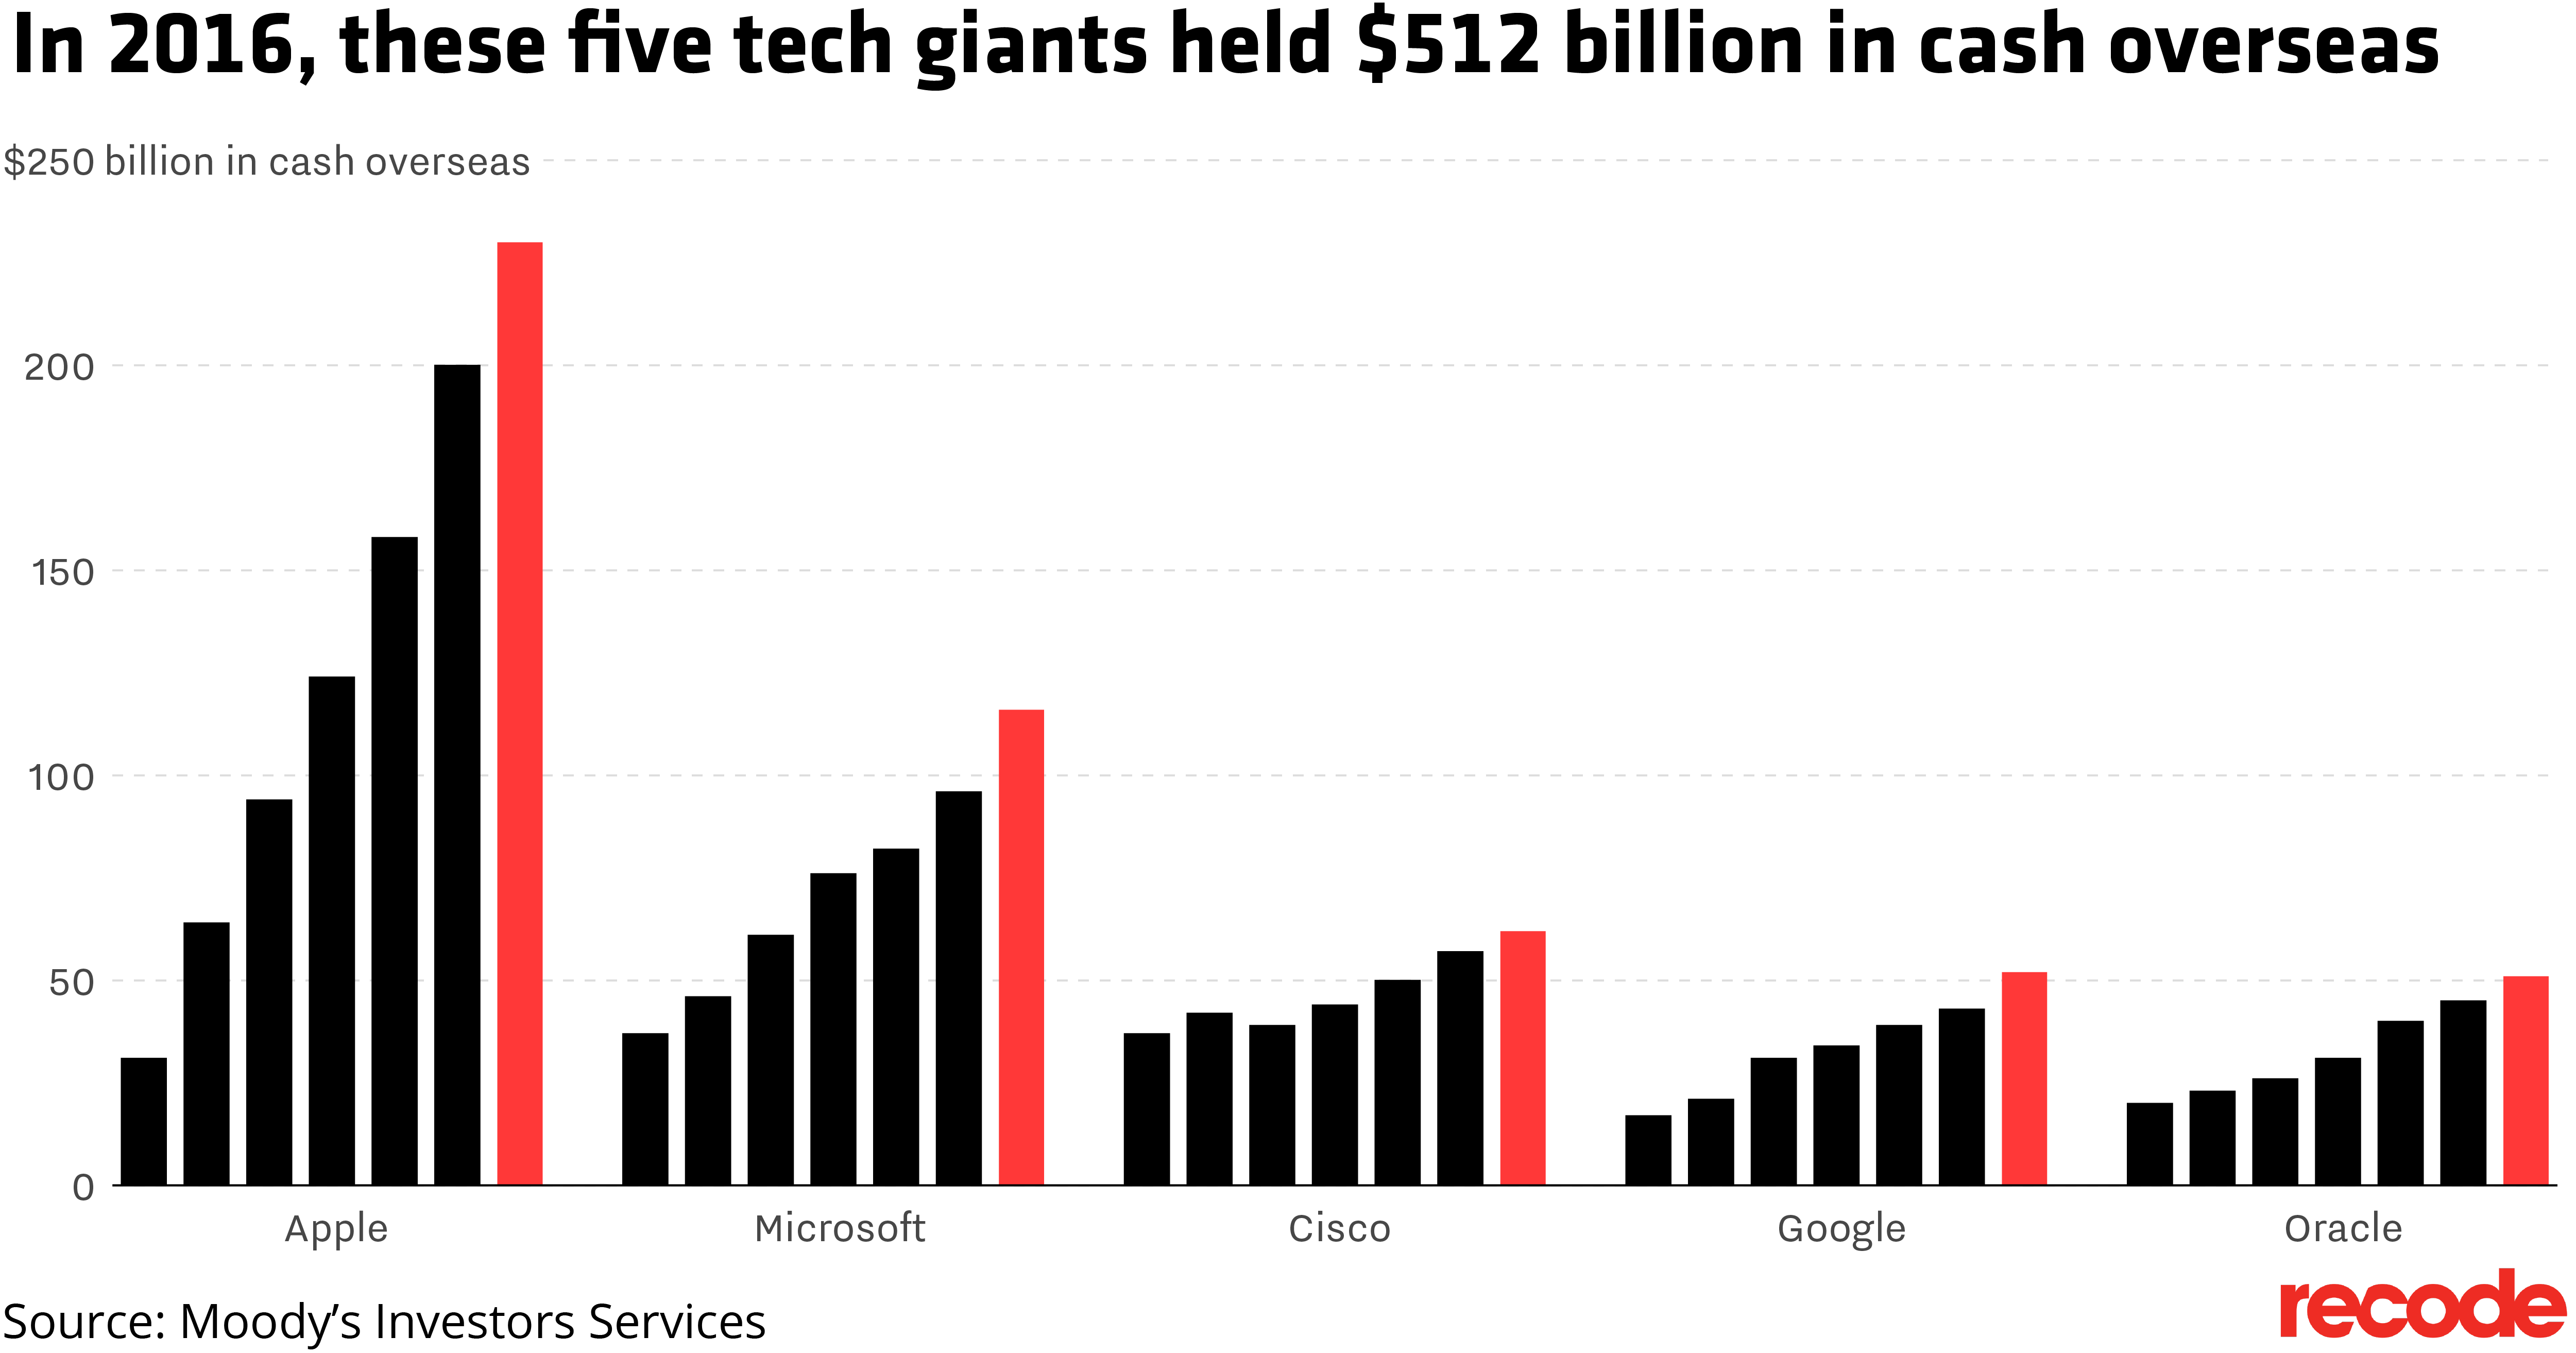 Tech companies with cash overseas